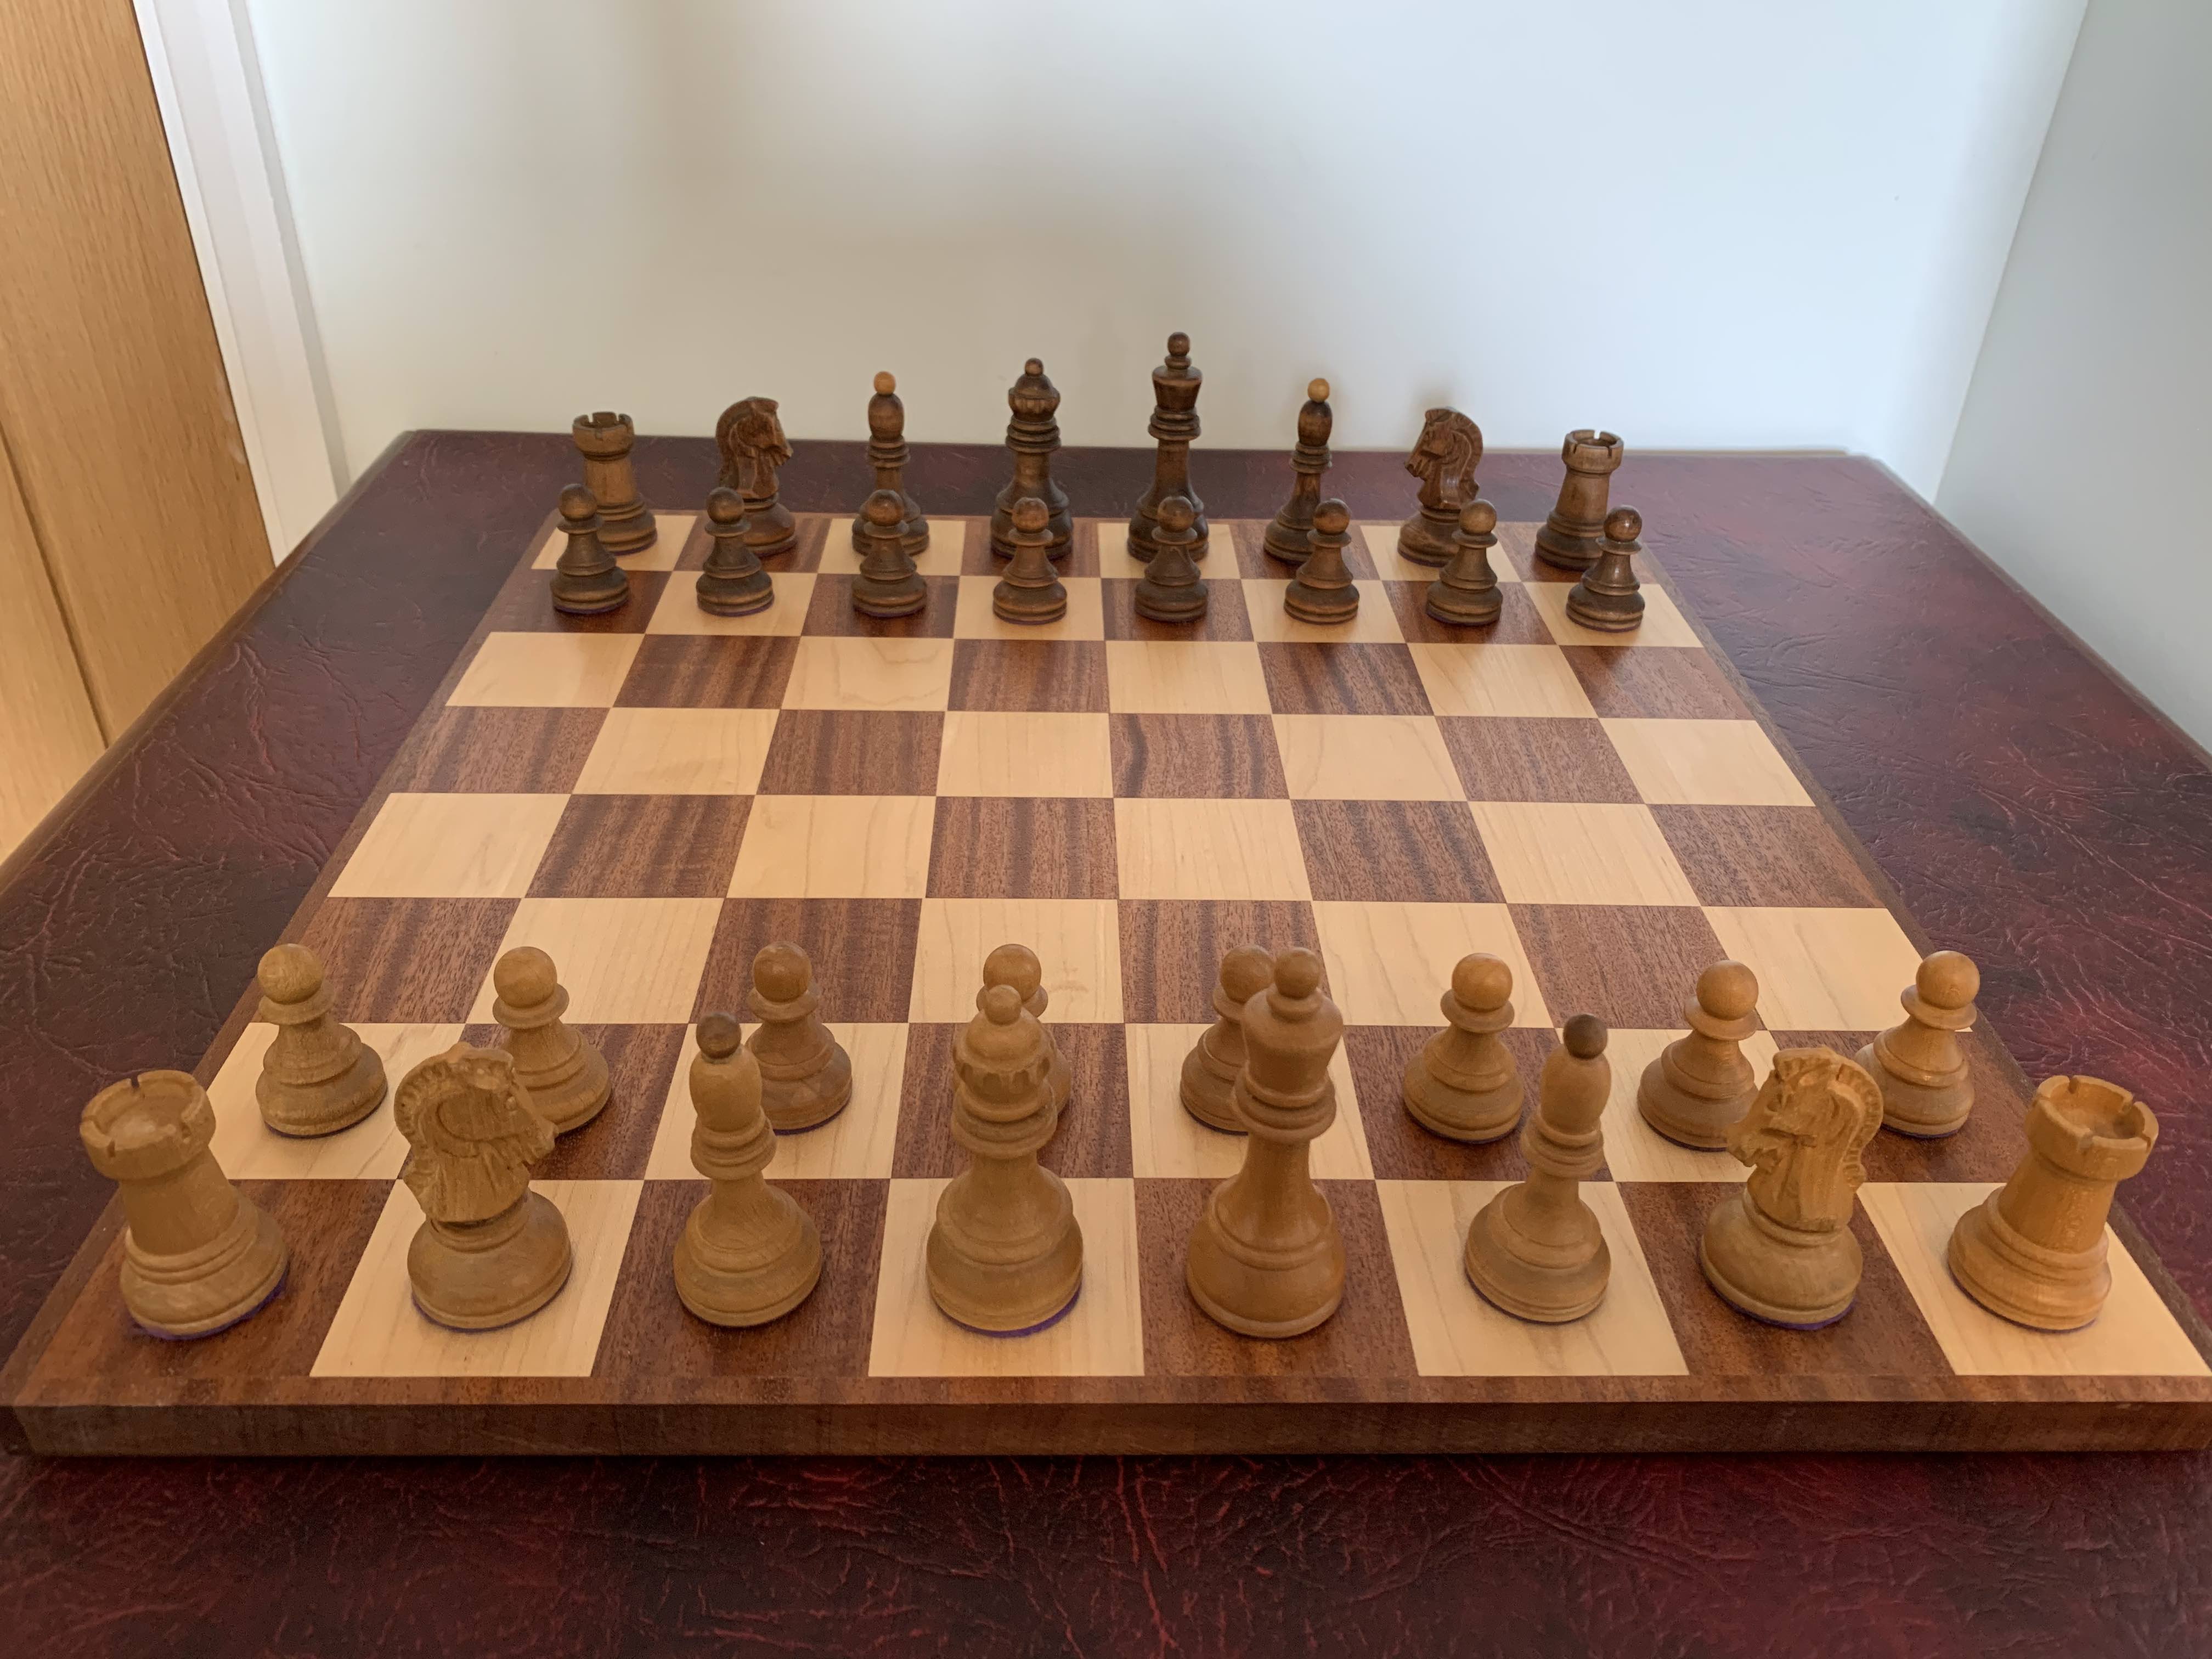 1970s chess set